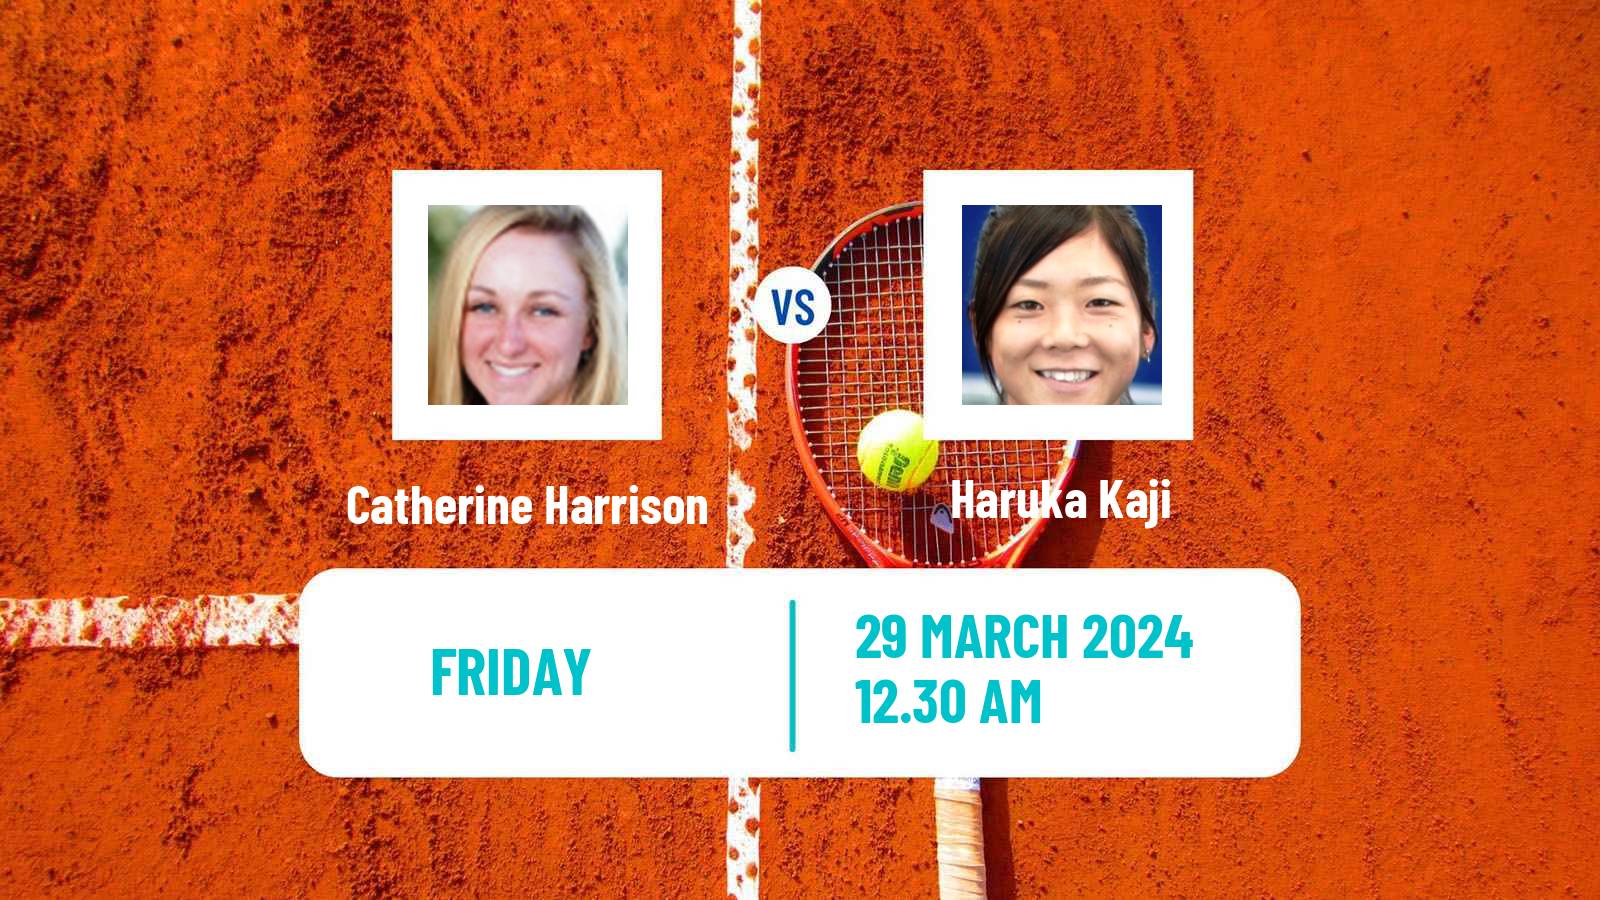 Tennis ITF W50 Kofu Women Catherine Harrison - Haruka Kaji